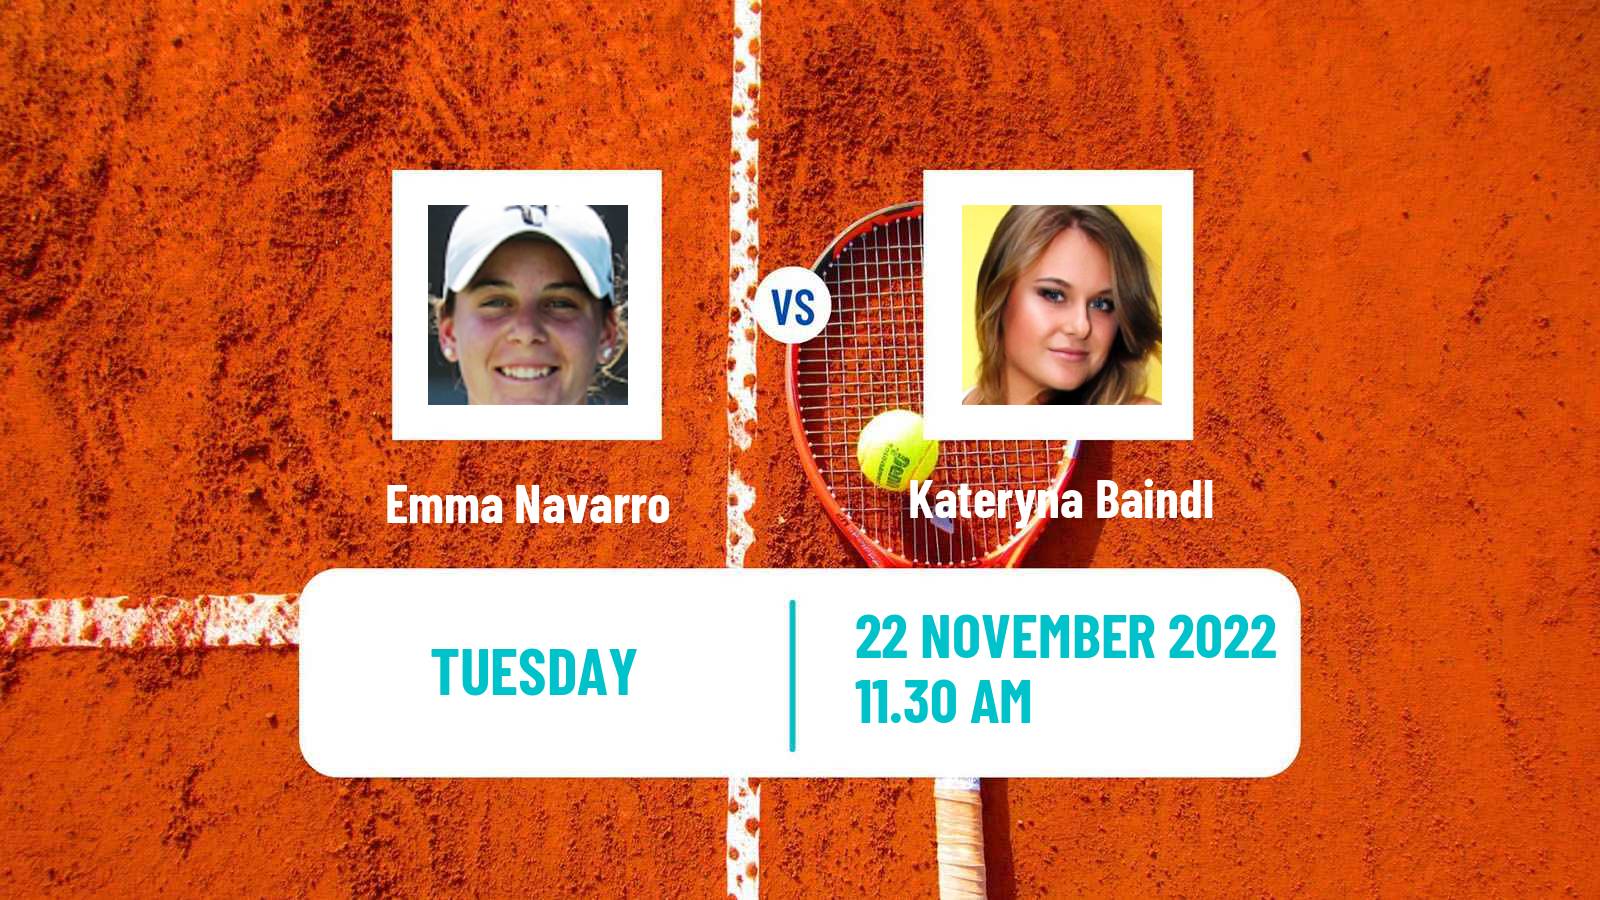 Tennis ATP Challenger Emma Navarro - Kateryna Baindl